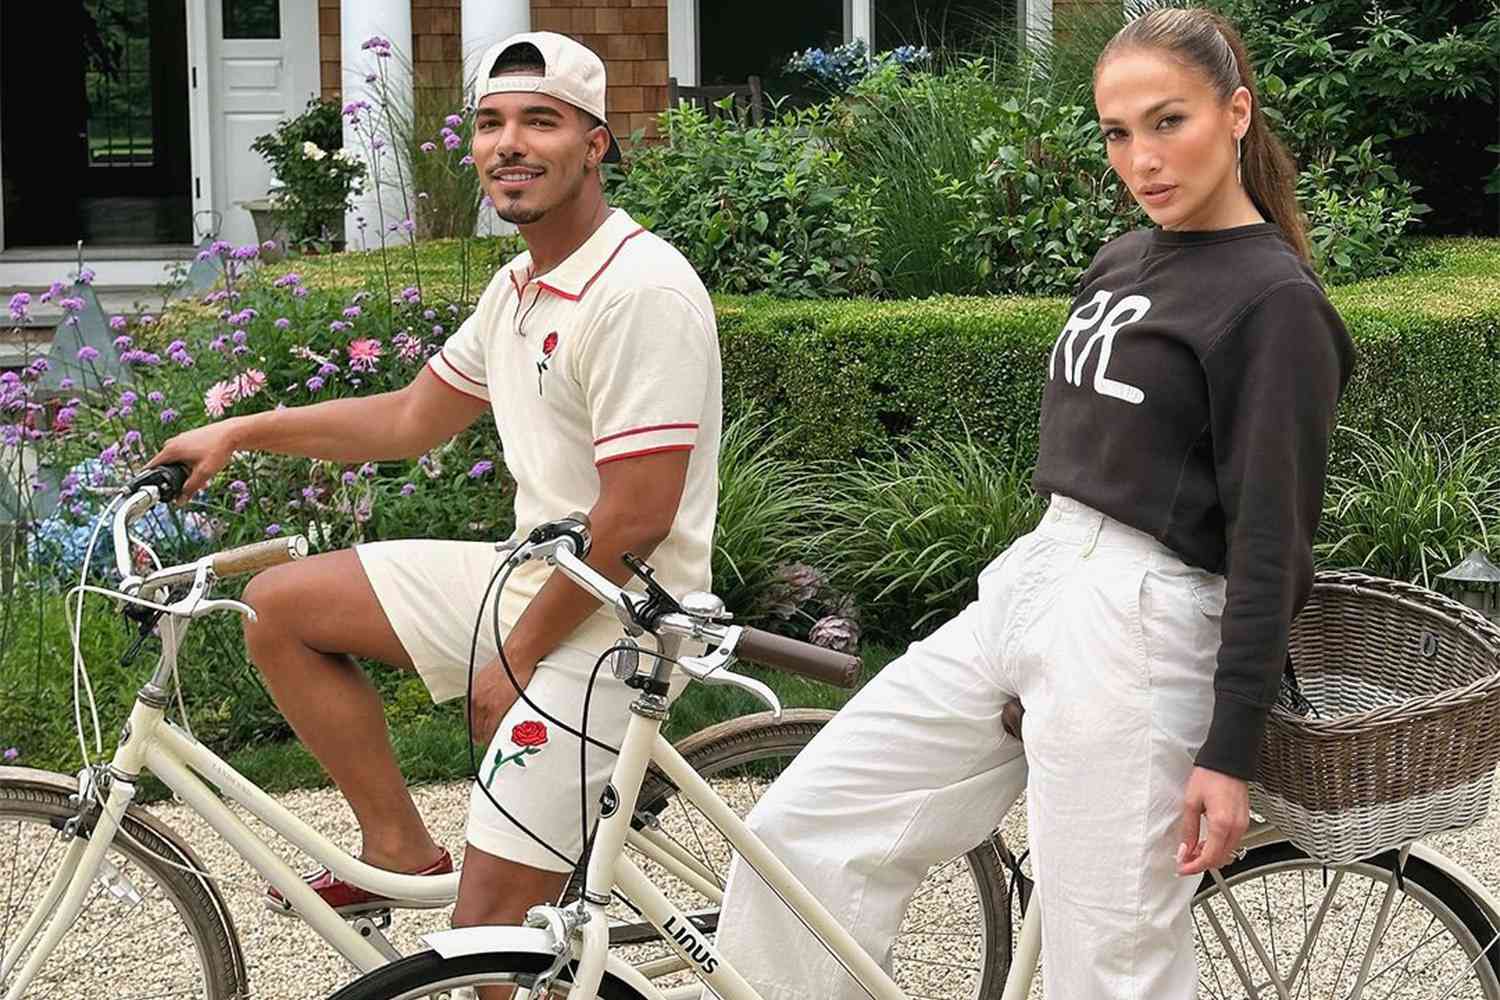 Jennifer Lopez Rocks Stylish Summer Look While Biking in the Hamptons with Friend Stevie Mackey